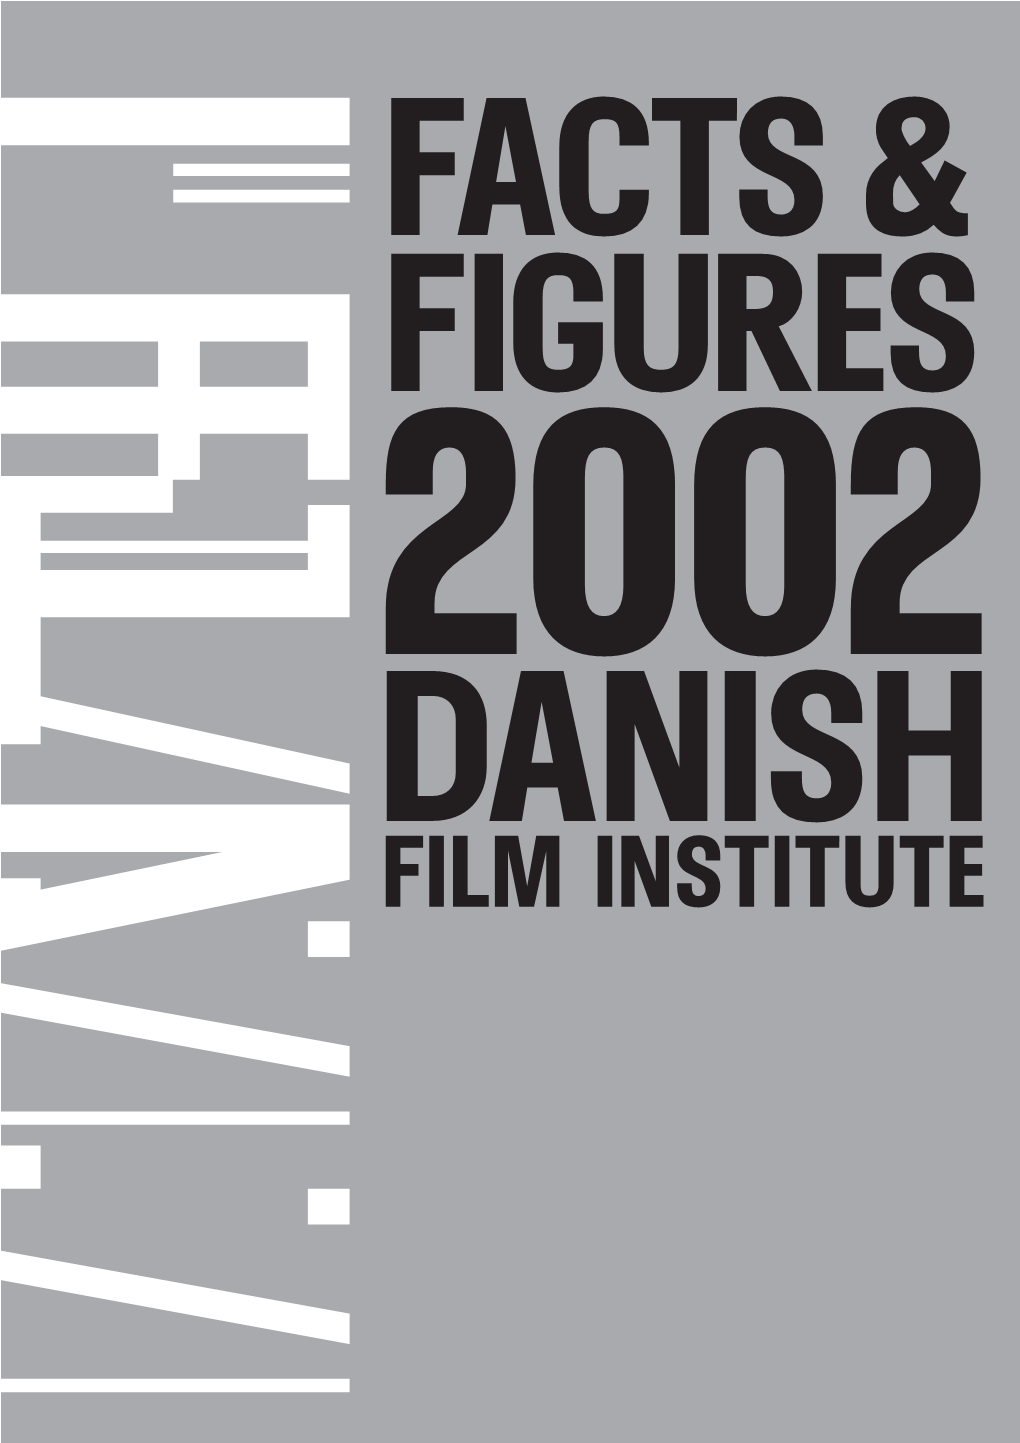 Film Institute Overview / Danish Film Institute / Facts & Figures 2002 / Page 2